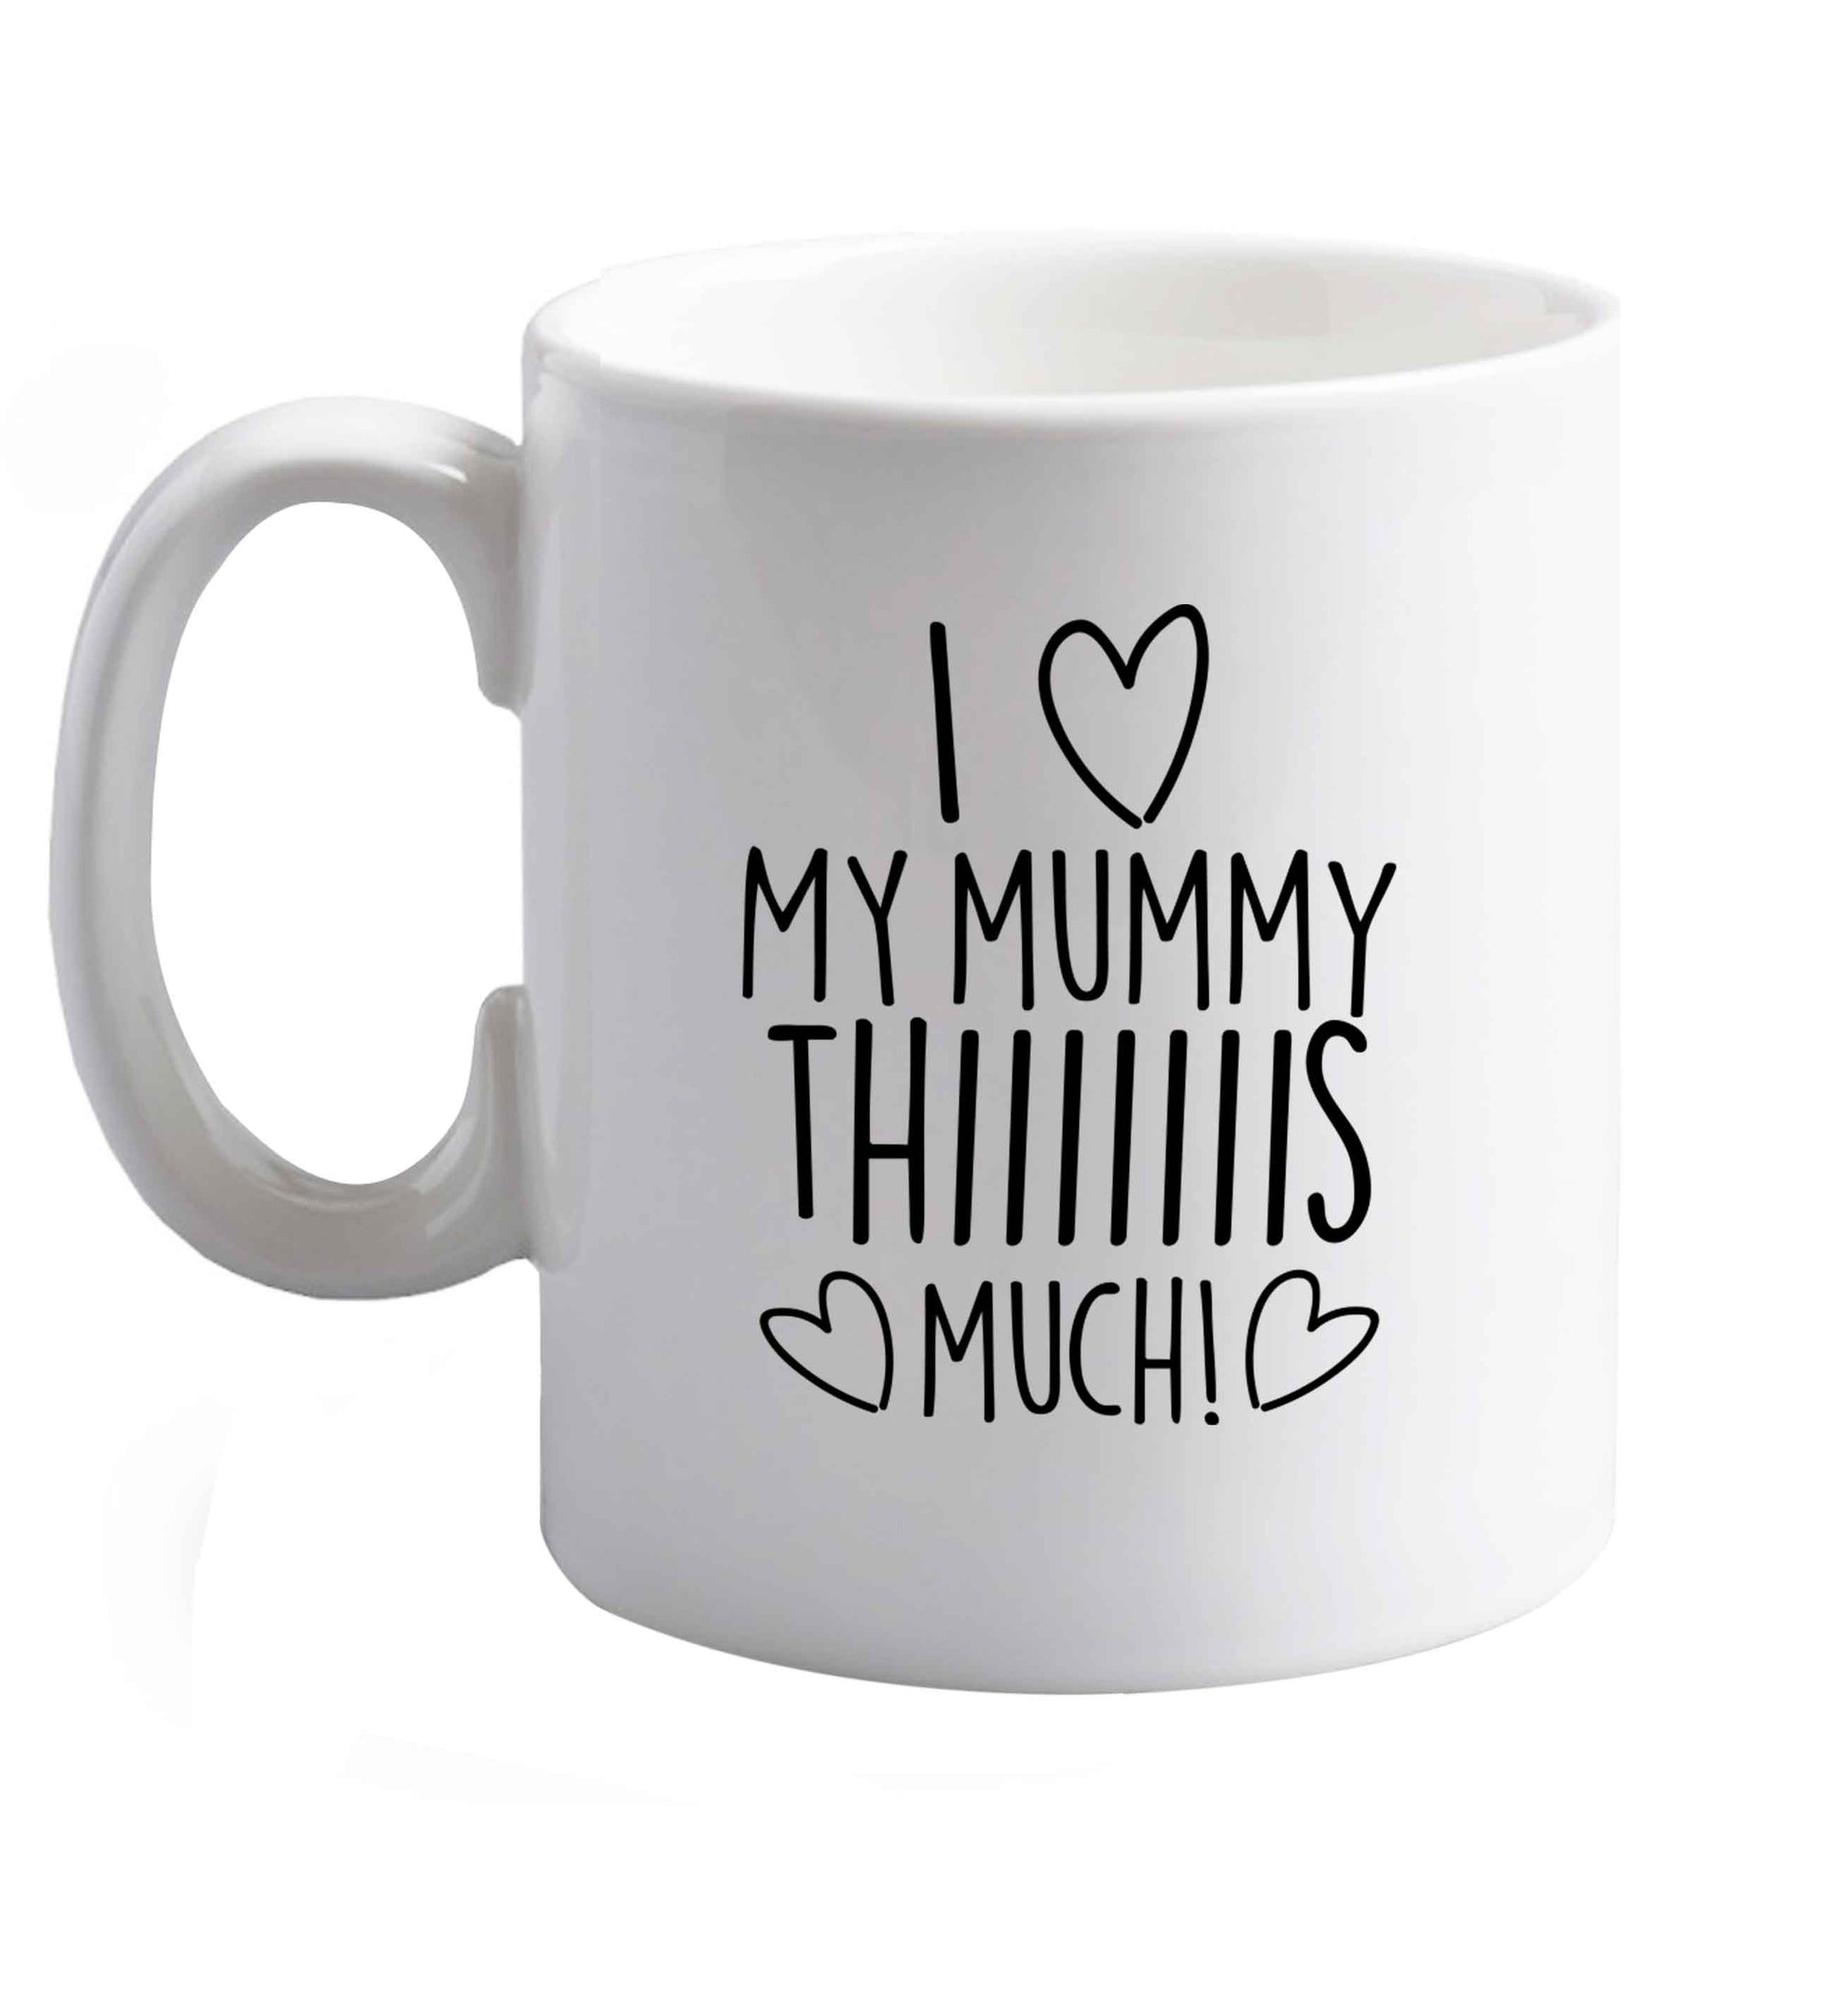 10 oz I love my mummy thiiiiis much! ceramic mug right handed